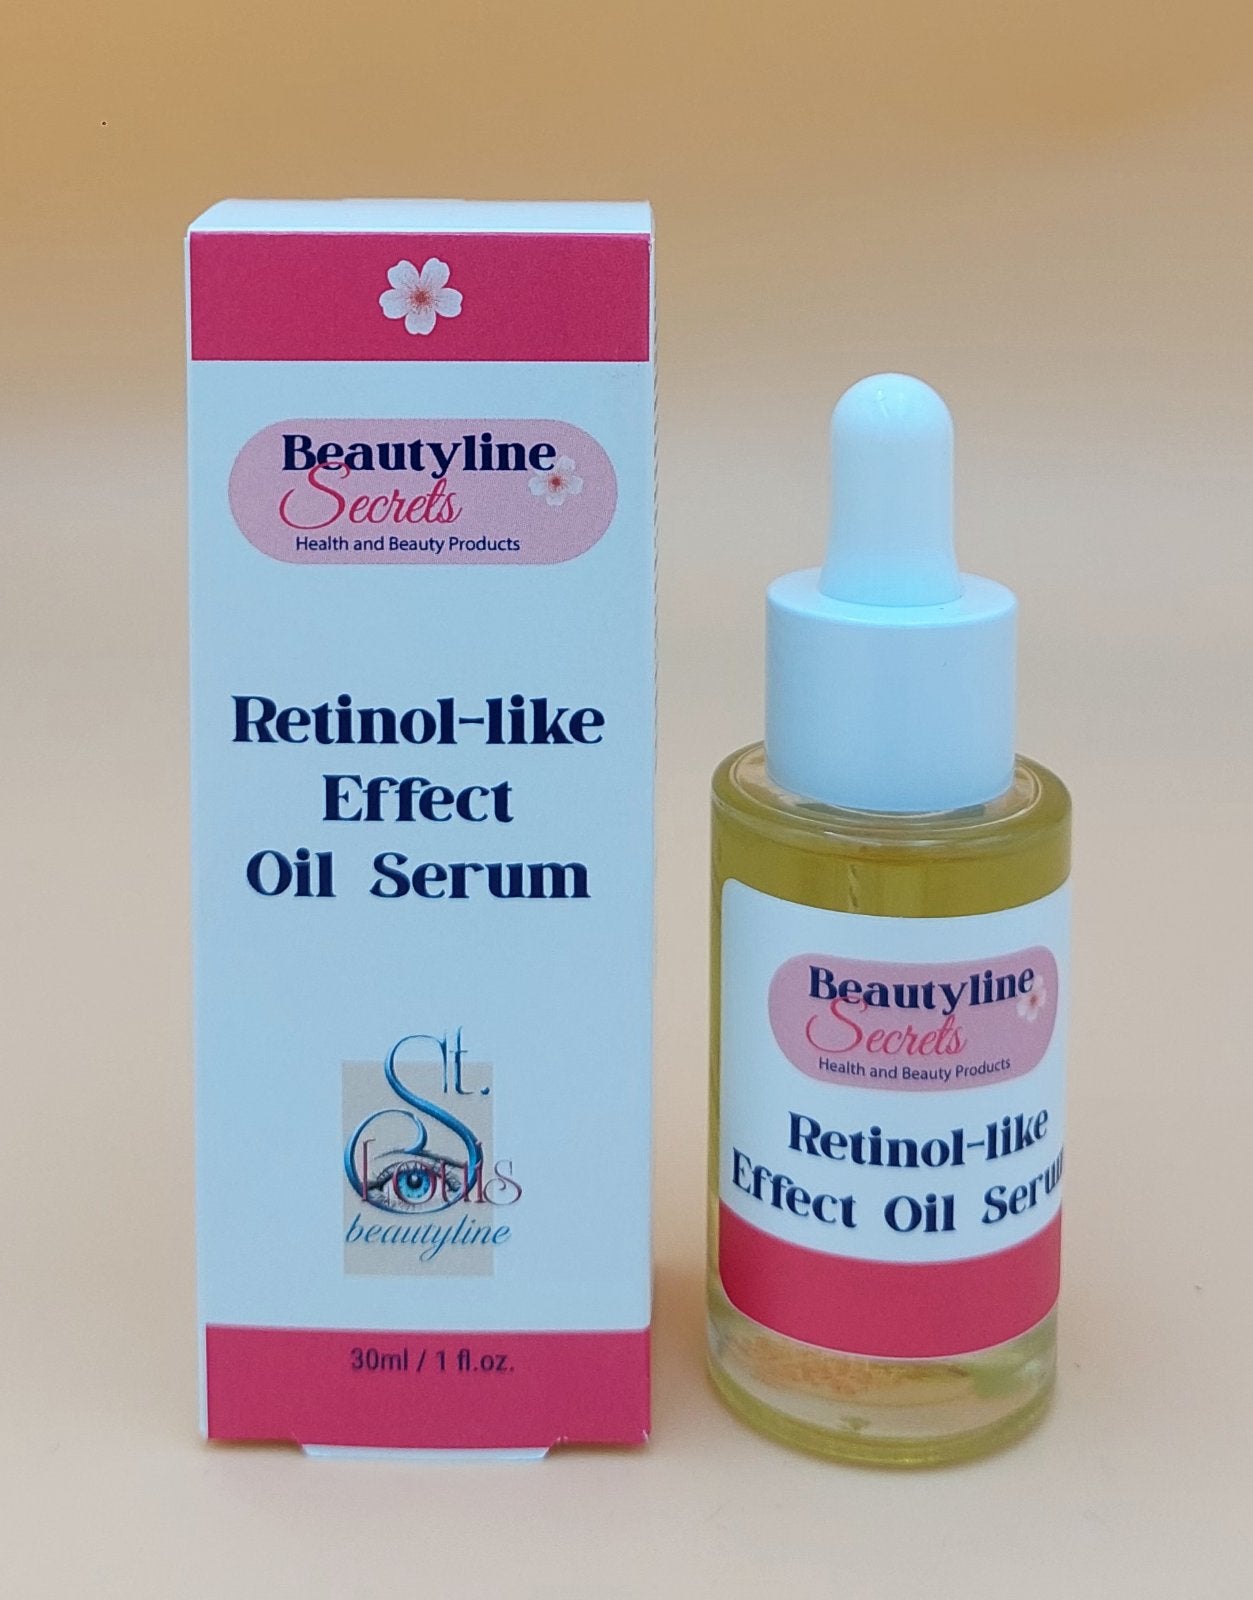 Retinol-like Effect Oil Serum